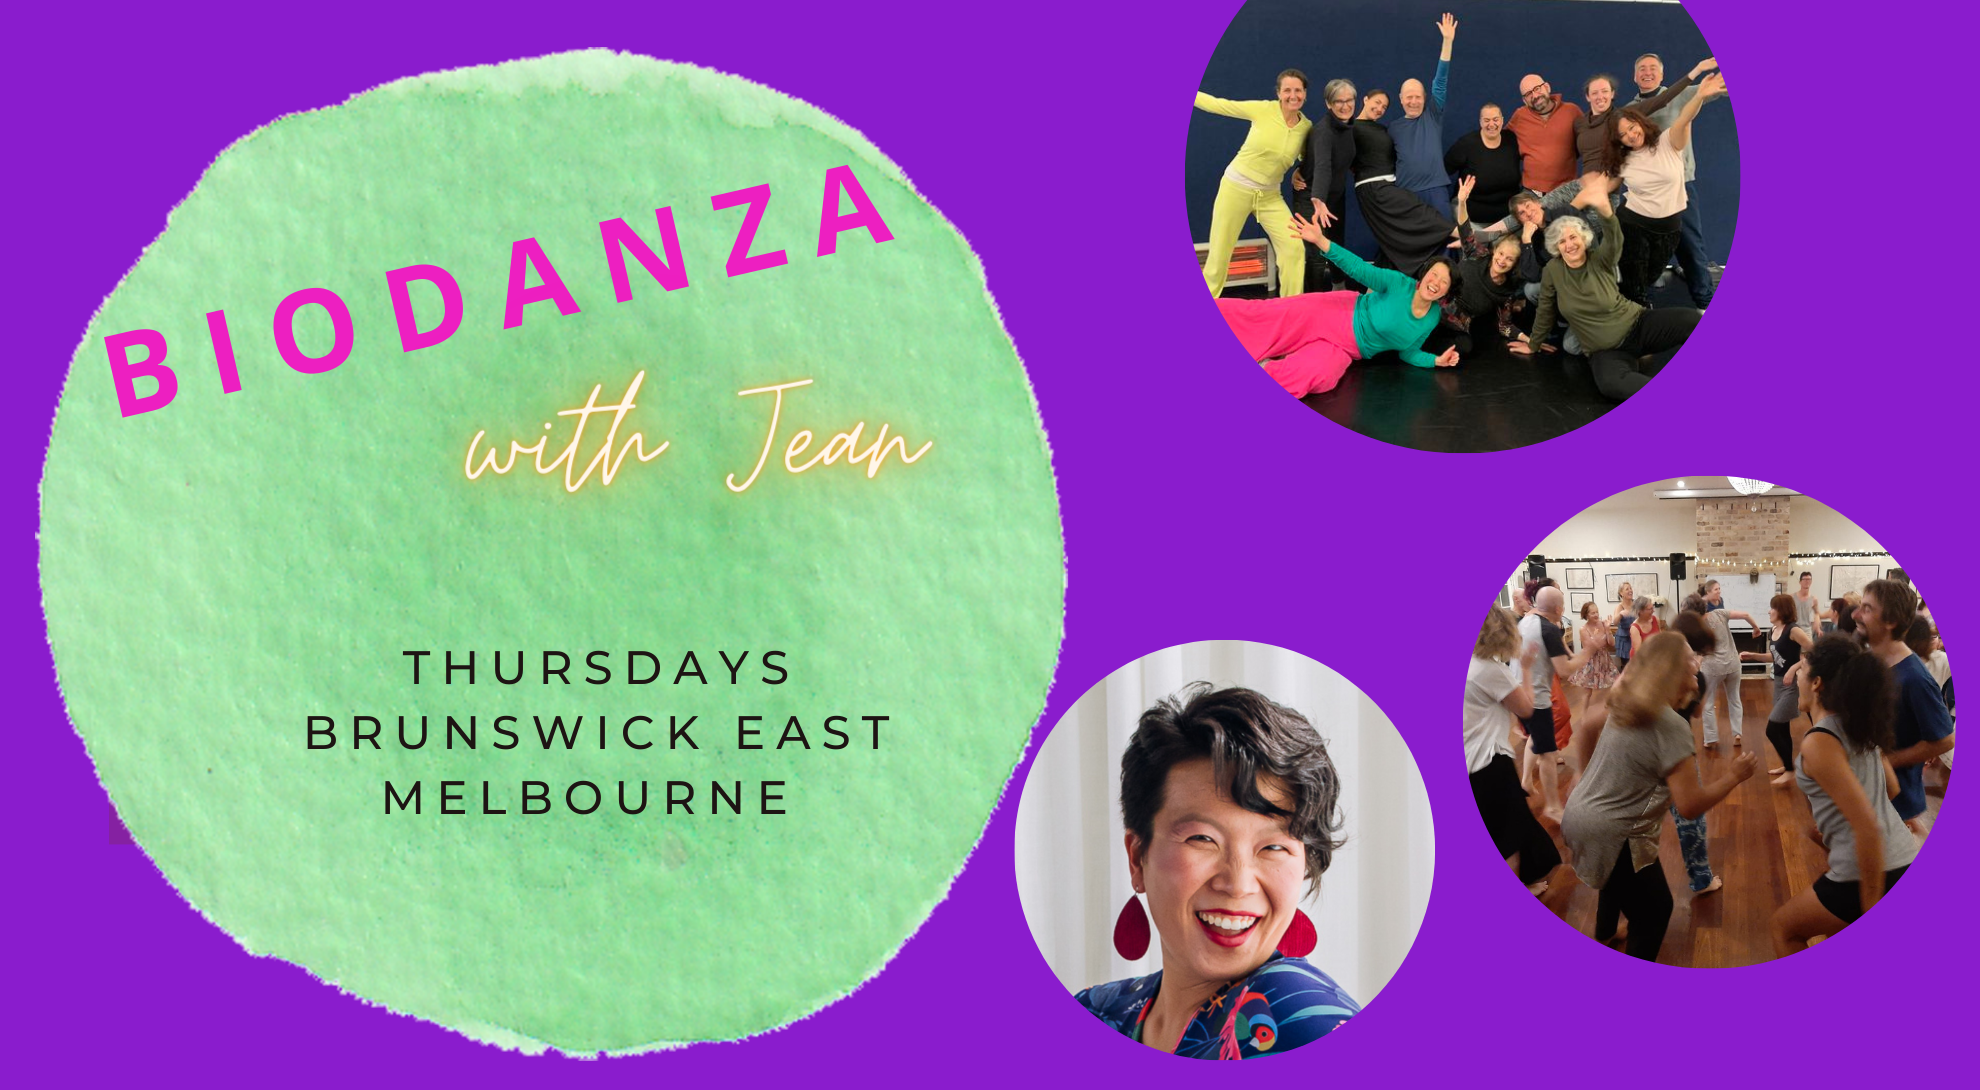 Biodanza Melbourne with Jean Thursdays Brunswick East, Melbourne